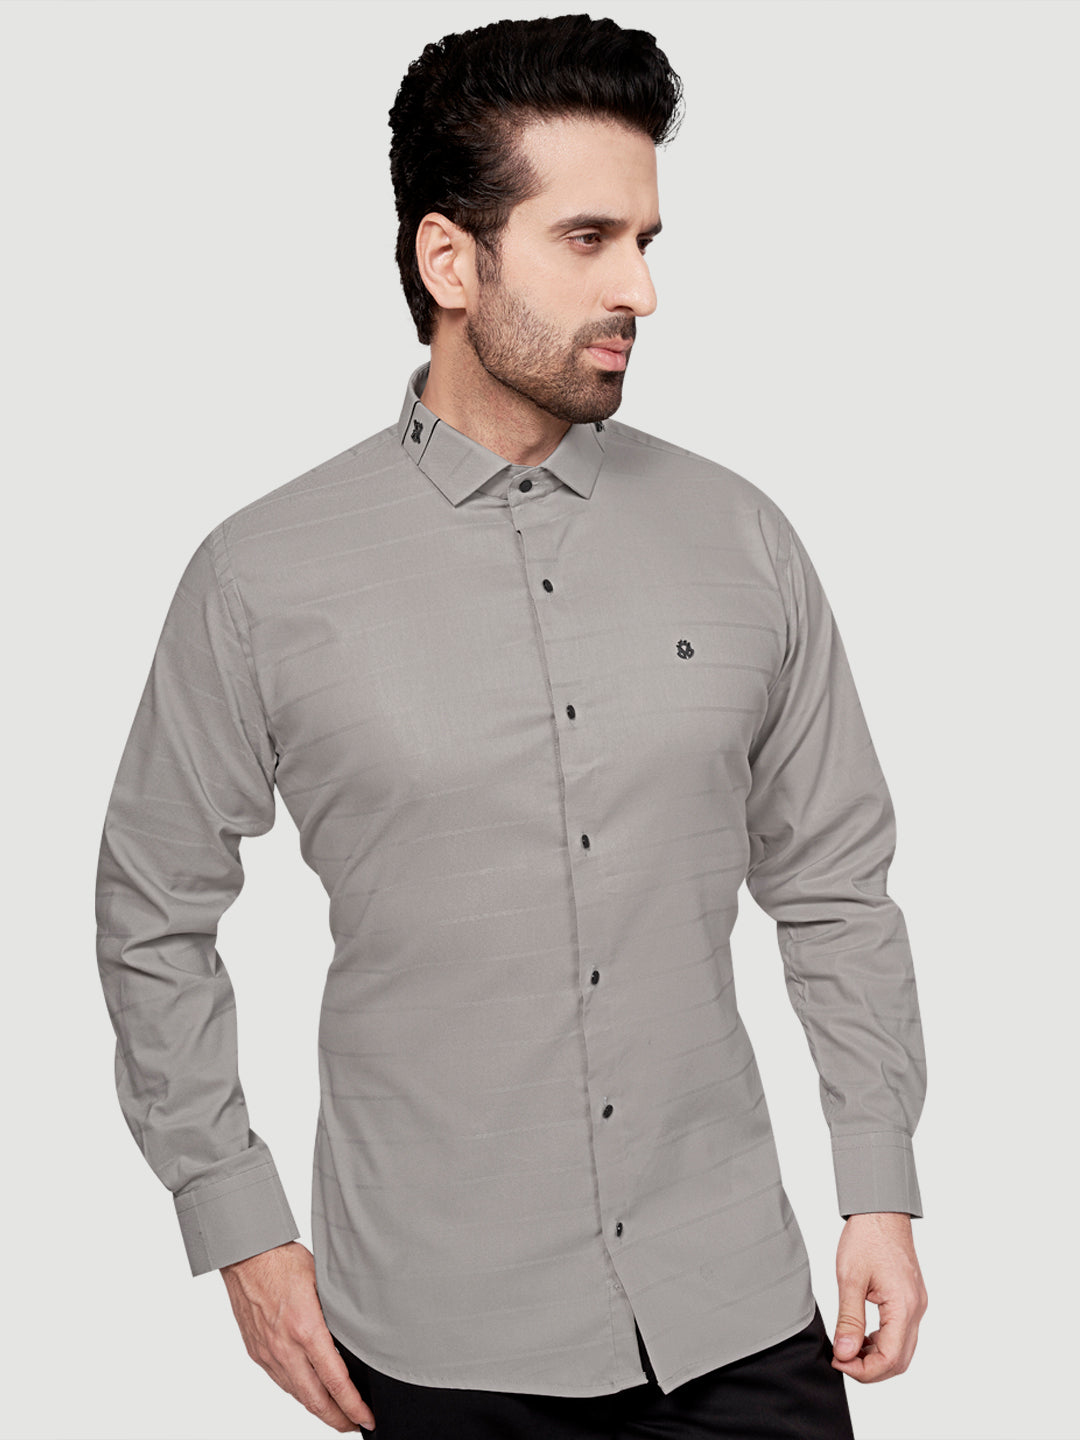 Black and White Men's Designer Shirt with Collar Accessory & Designer Broach Grey